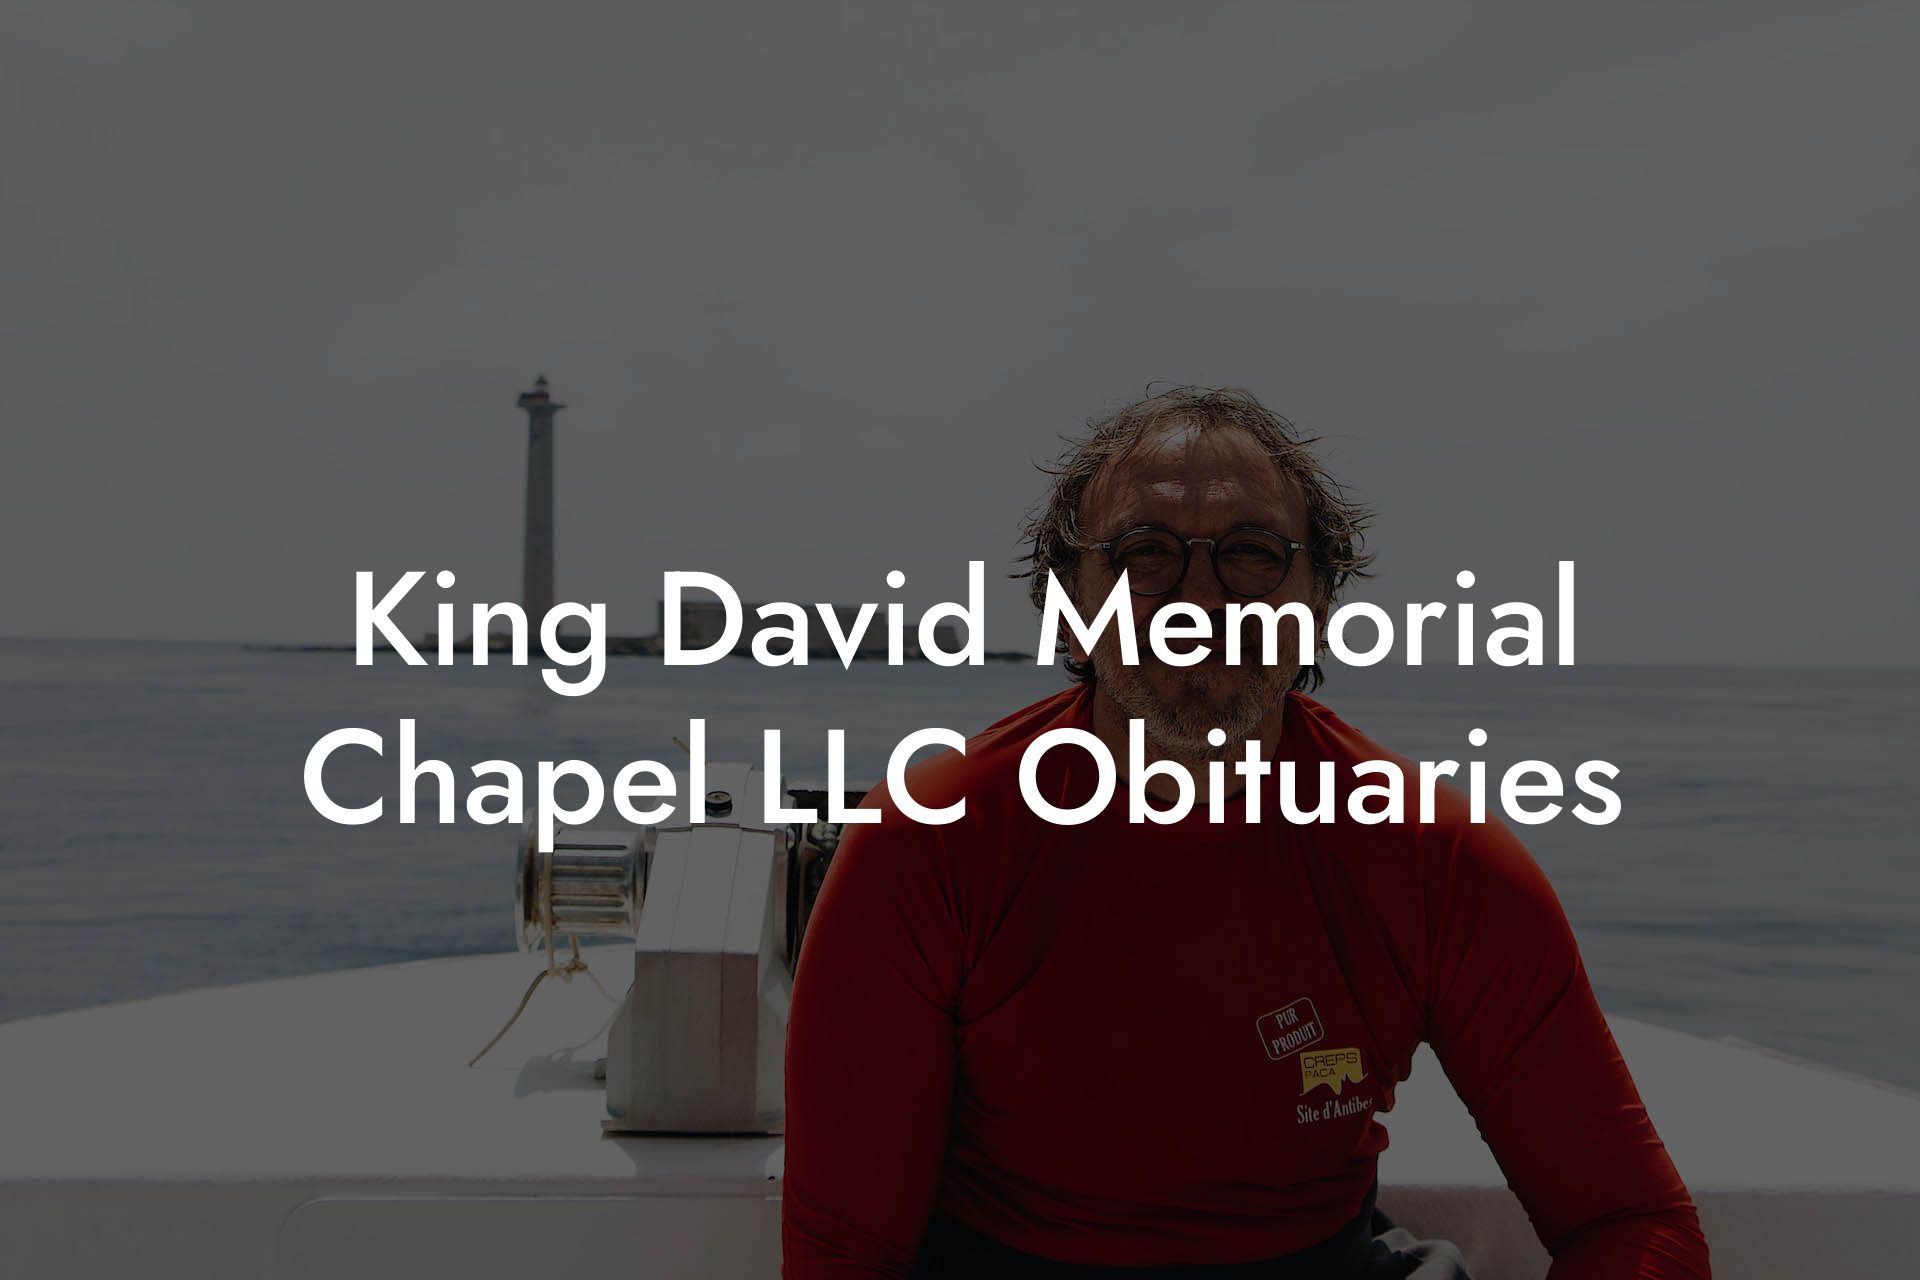 King David Memorial Chapel LLC Obituaries